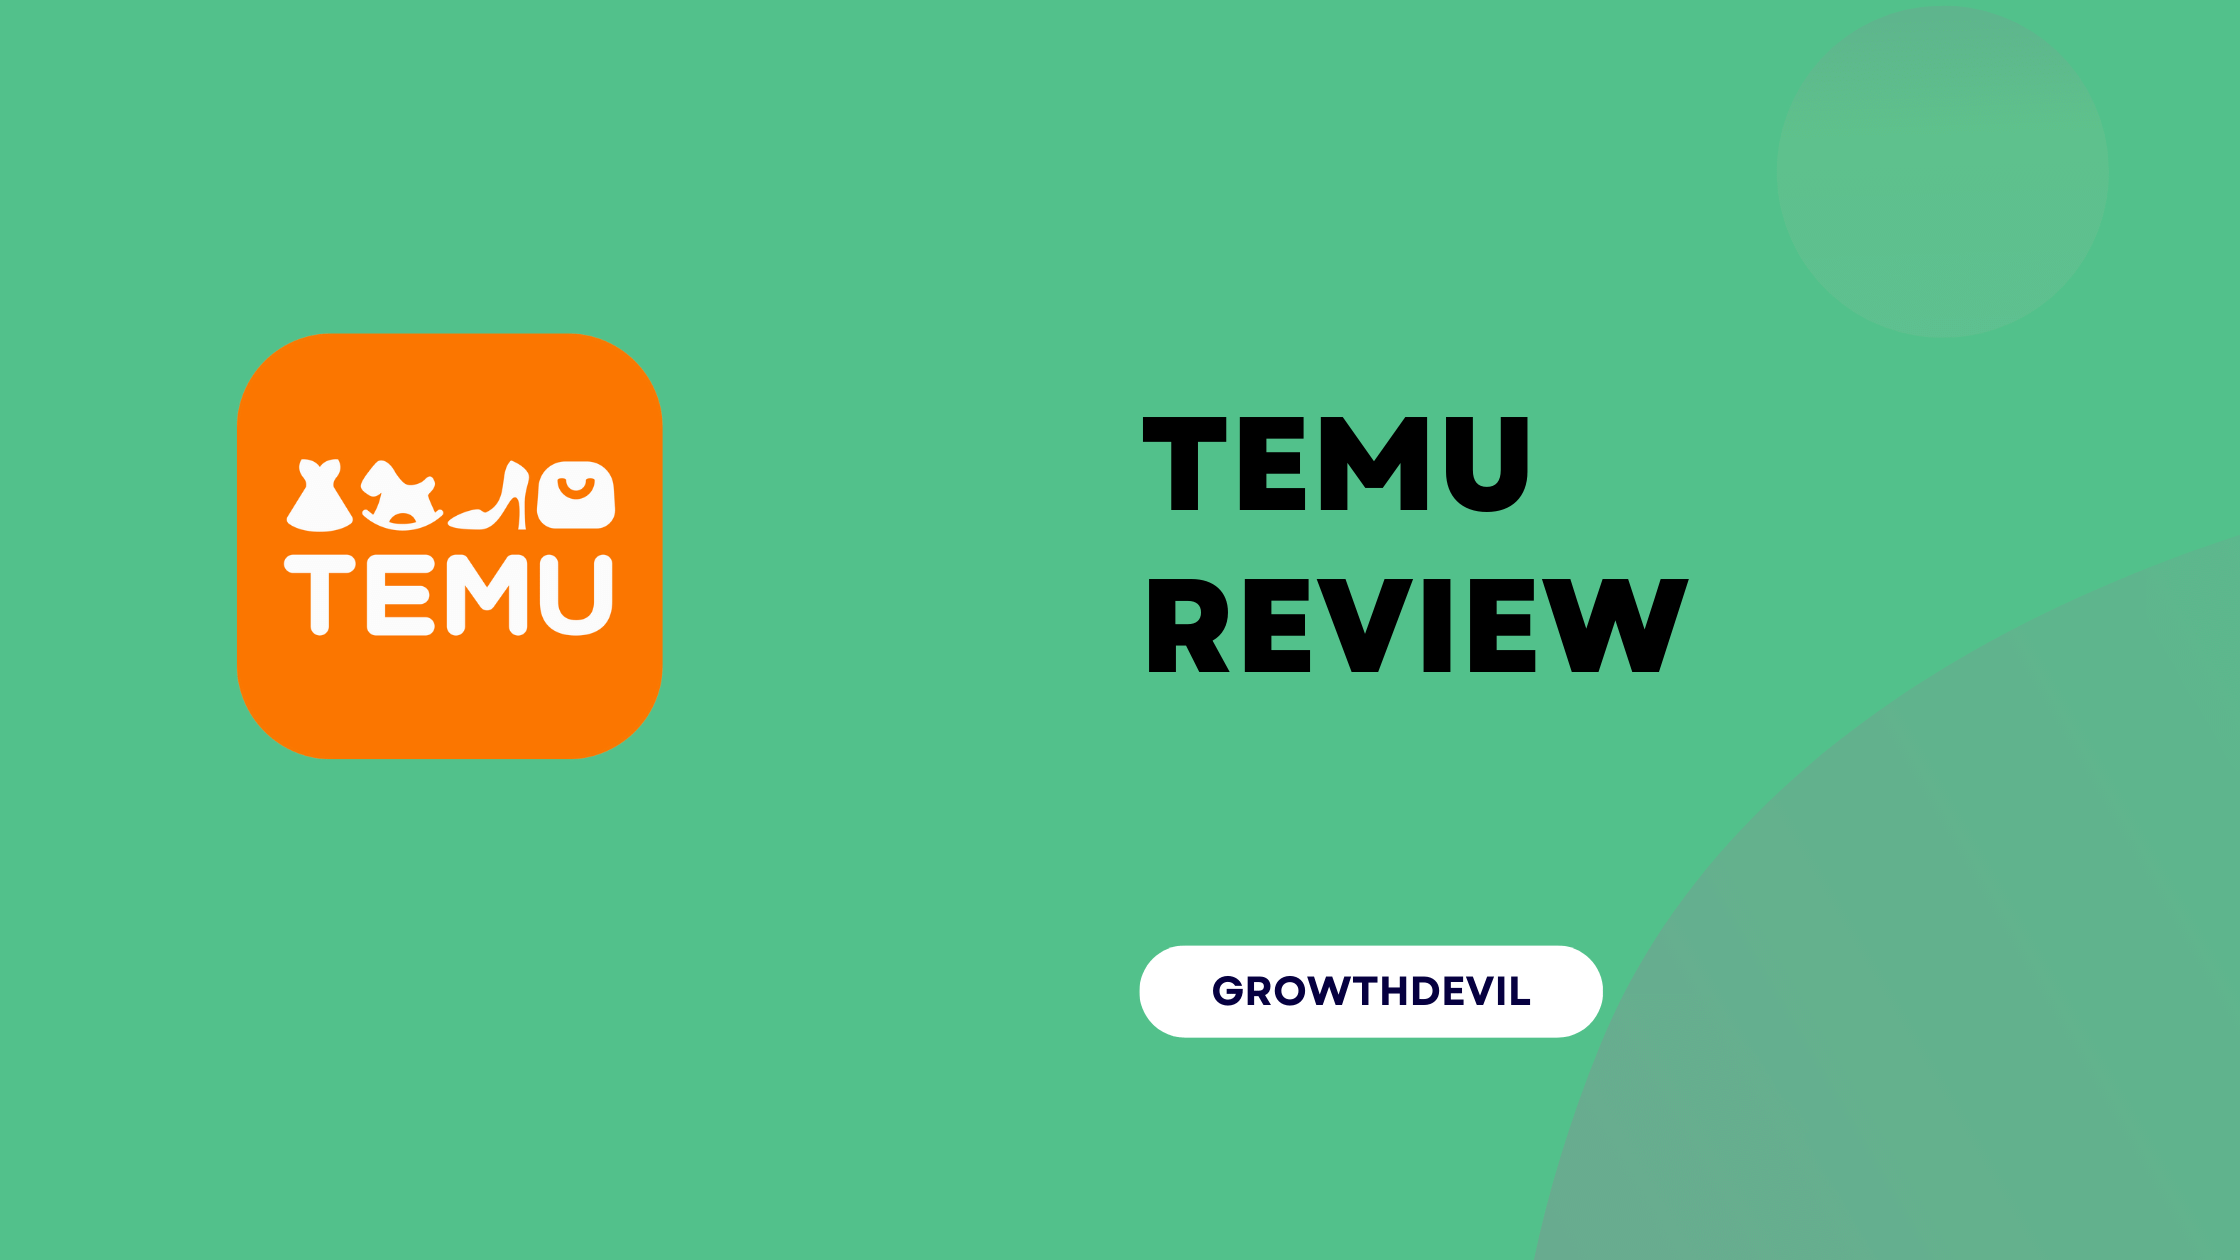 Temu Review - GrowthDevil